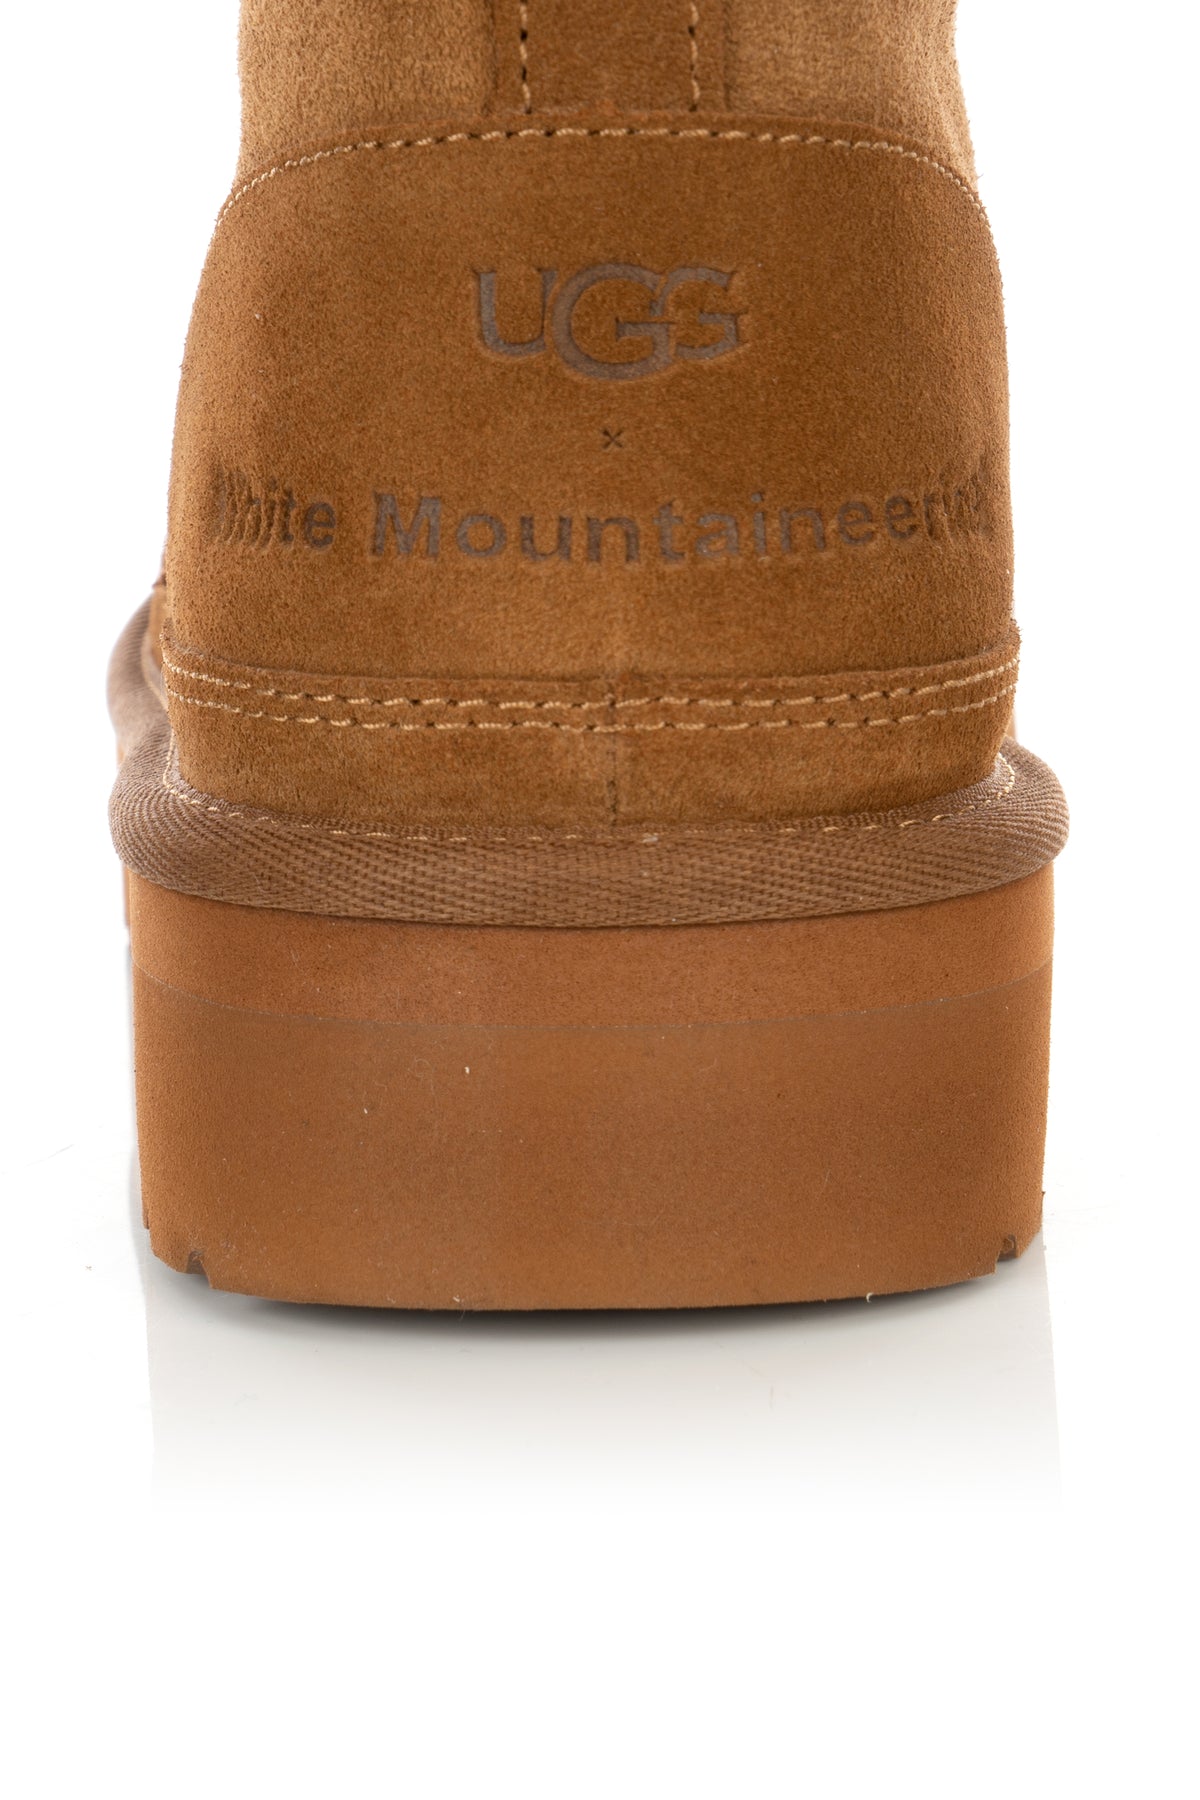 White Mountaineering | x UGG 'Harkley Zip' Boot Brown - Concrete